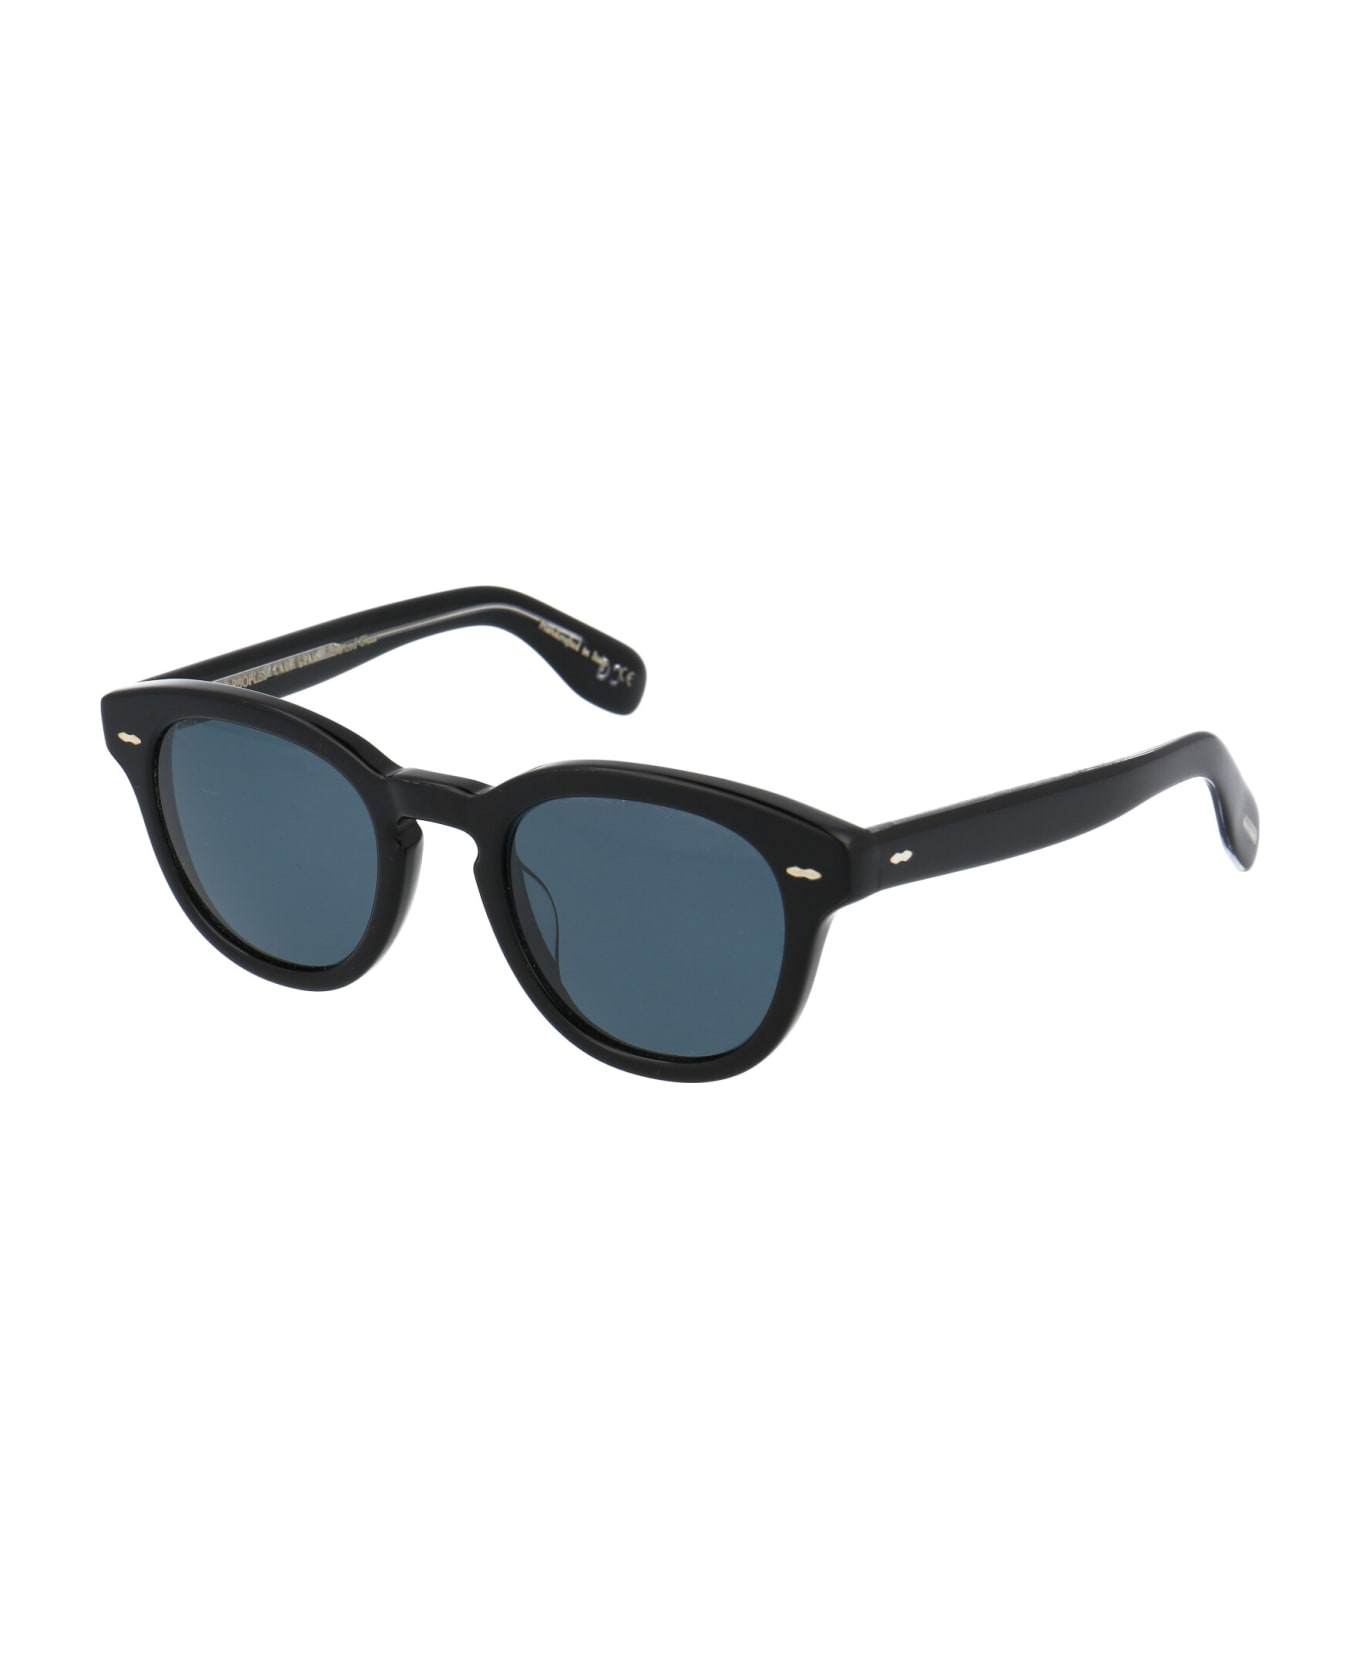 Oliver Peoples Cary Grant Sun Sunglasses - 14923R BLACK サングラス